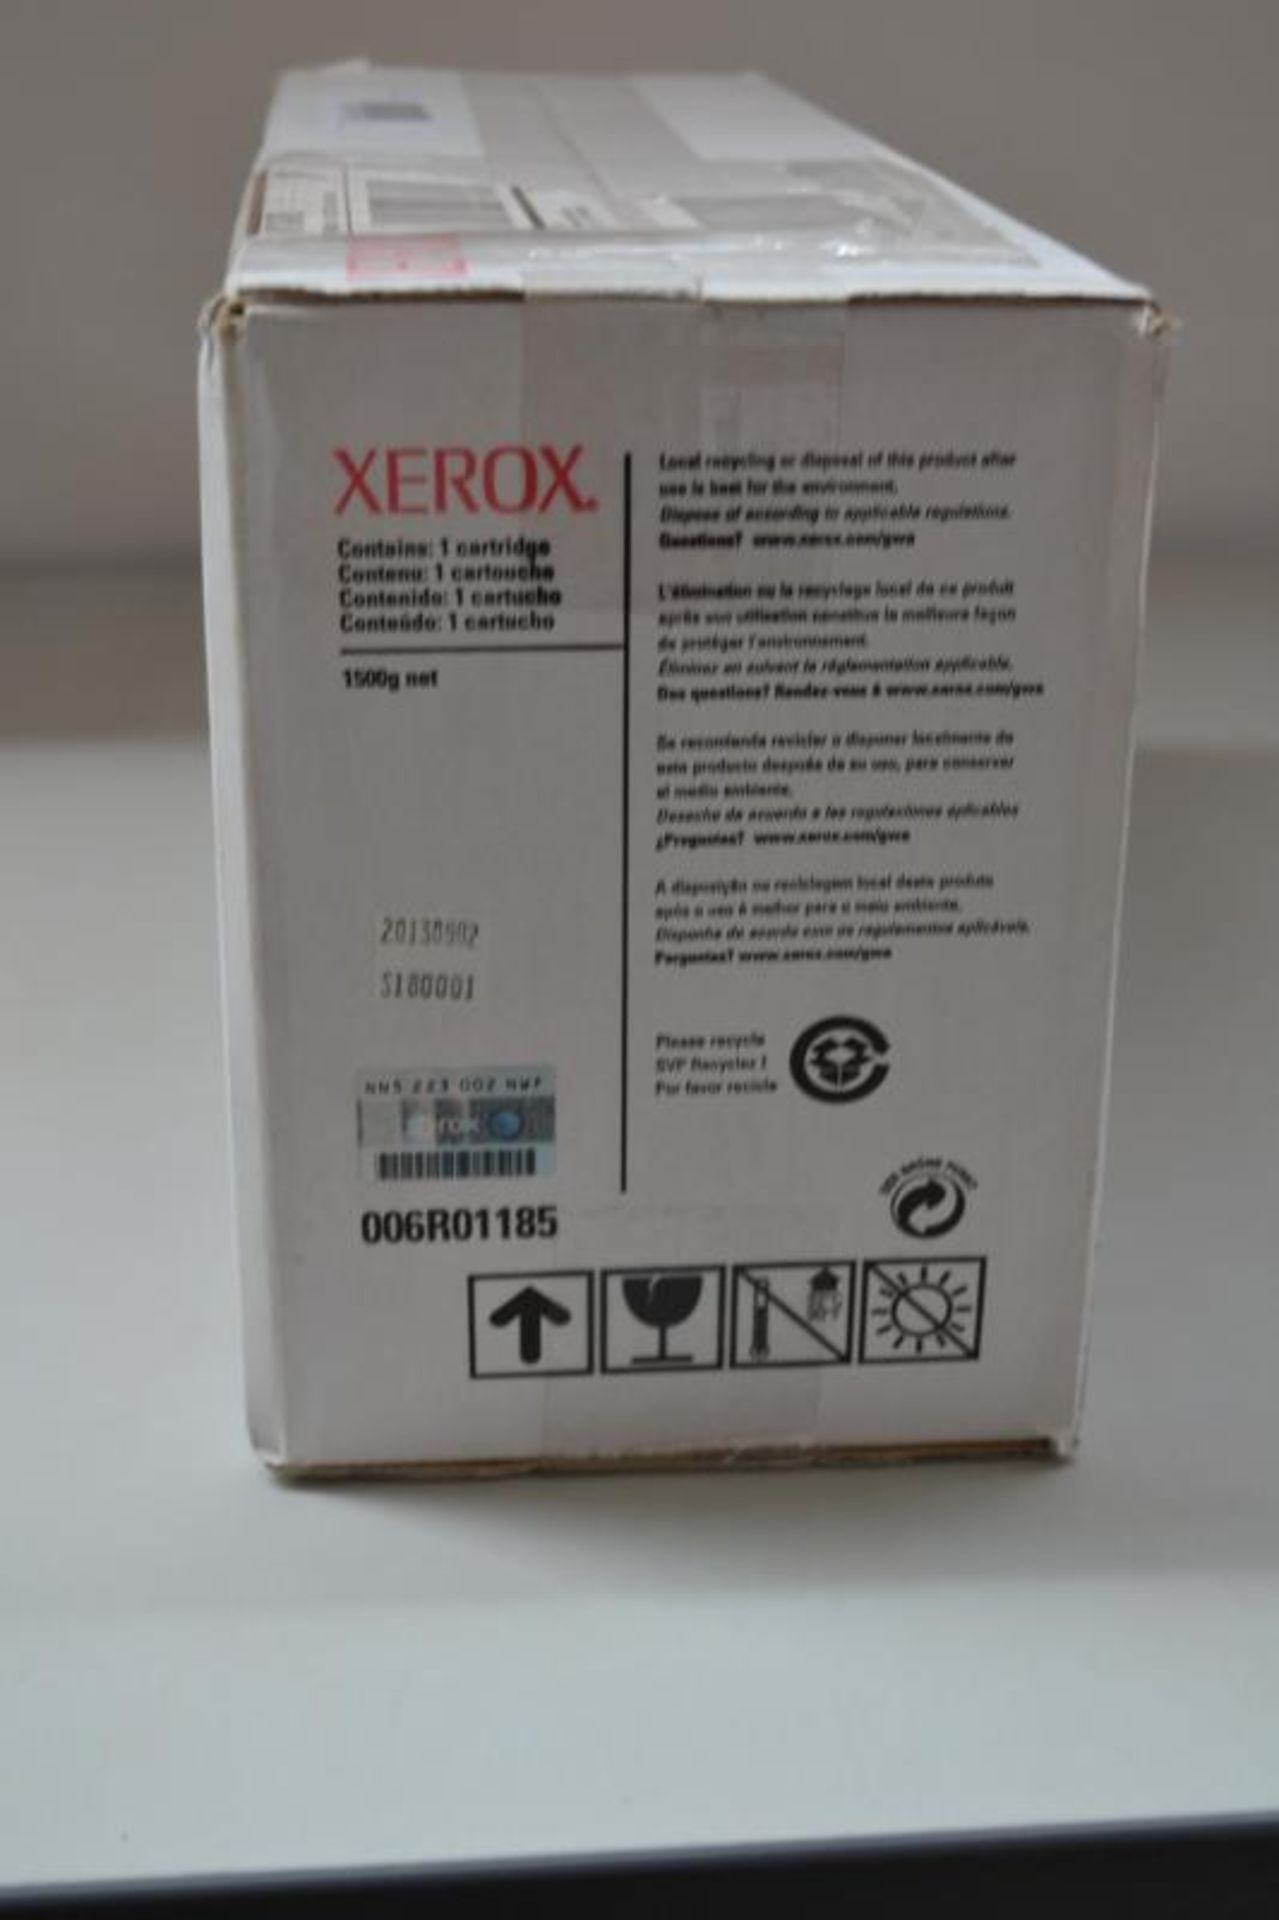 1 x Xerox 006R01185 Black Printer Toner Cartridge for 6030/6050 - New In Box - Ref J2199 - CL394 - L - Image 2 of 3